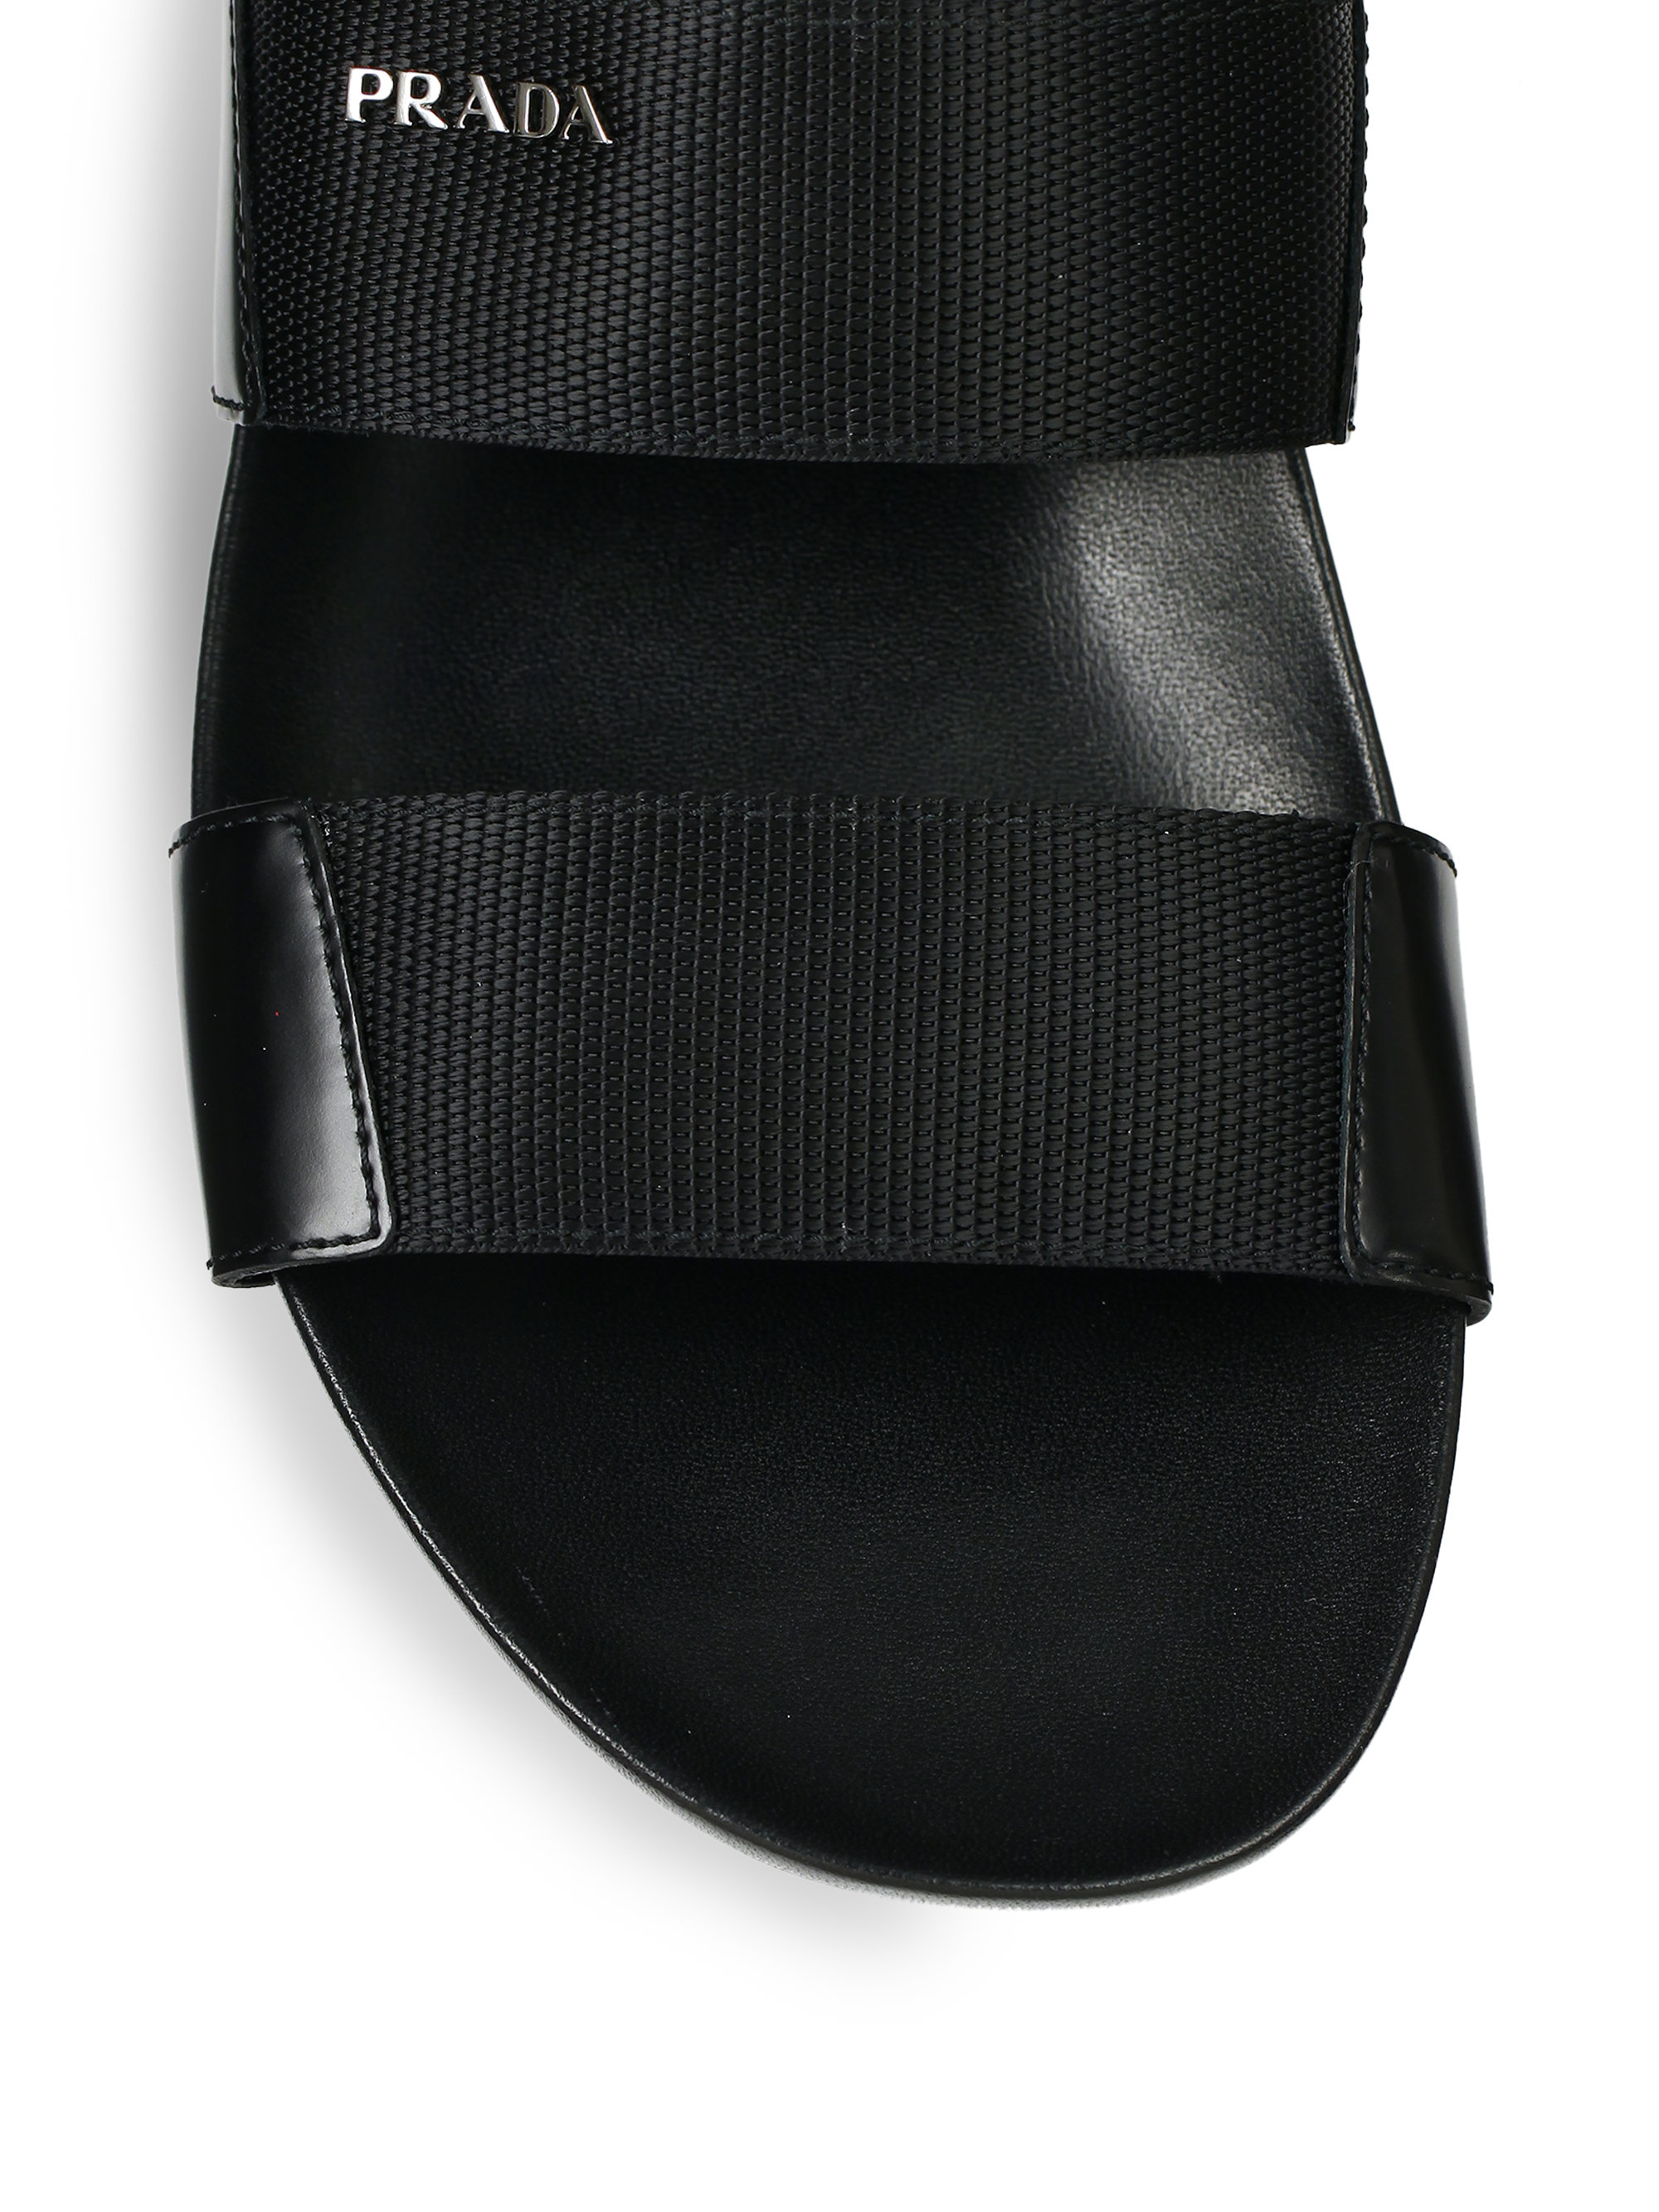 Lyst - Prada Double-Strap Nylon Sandals in Black for Men